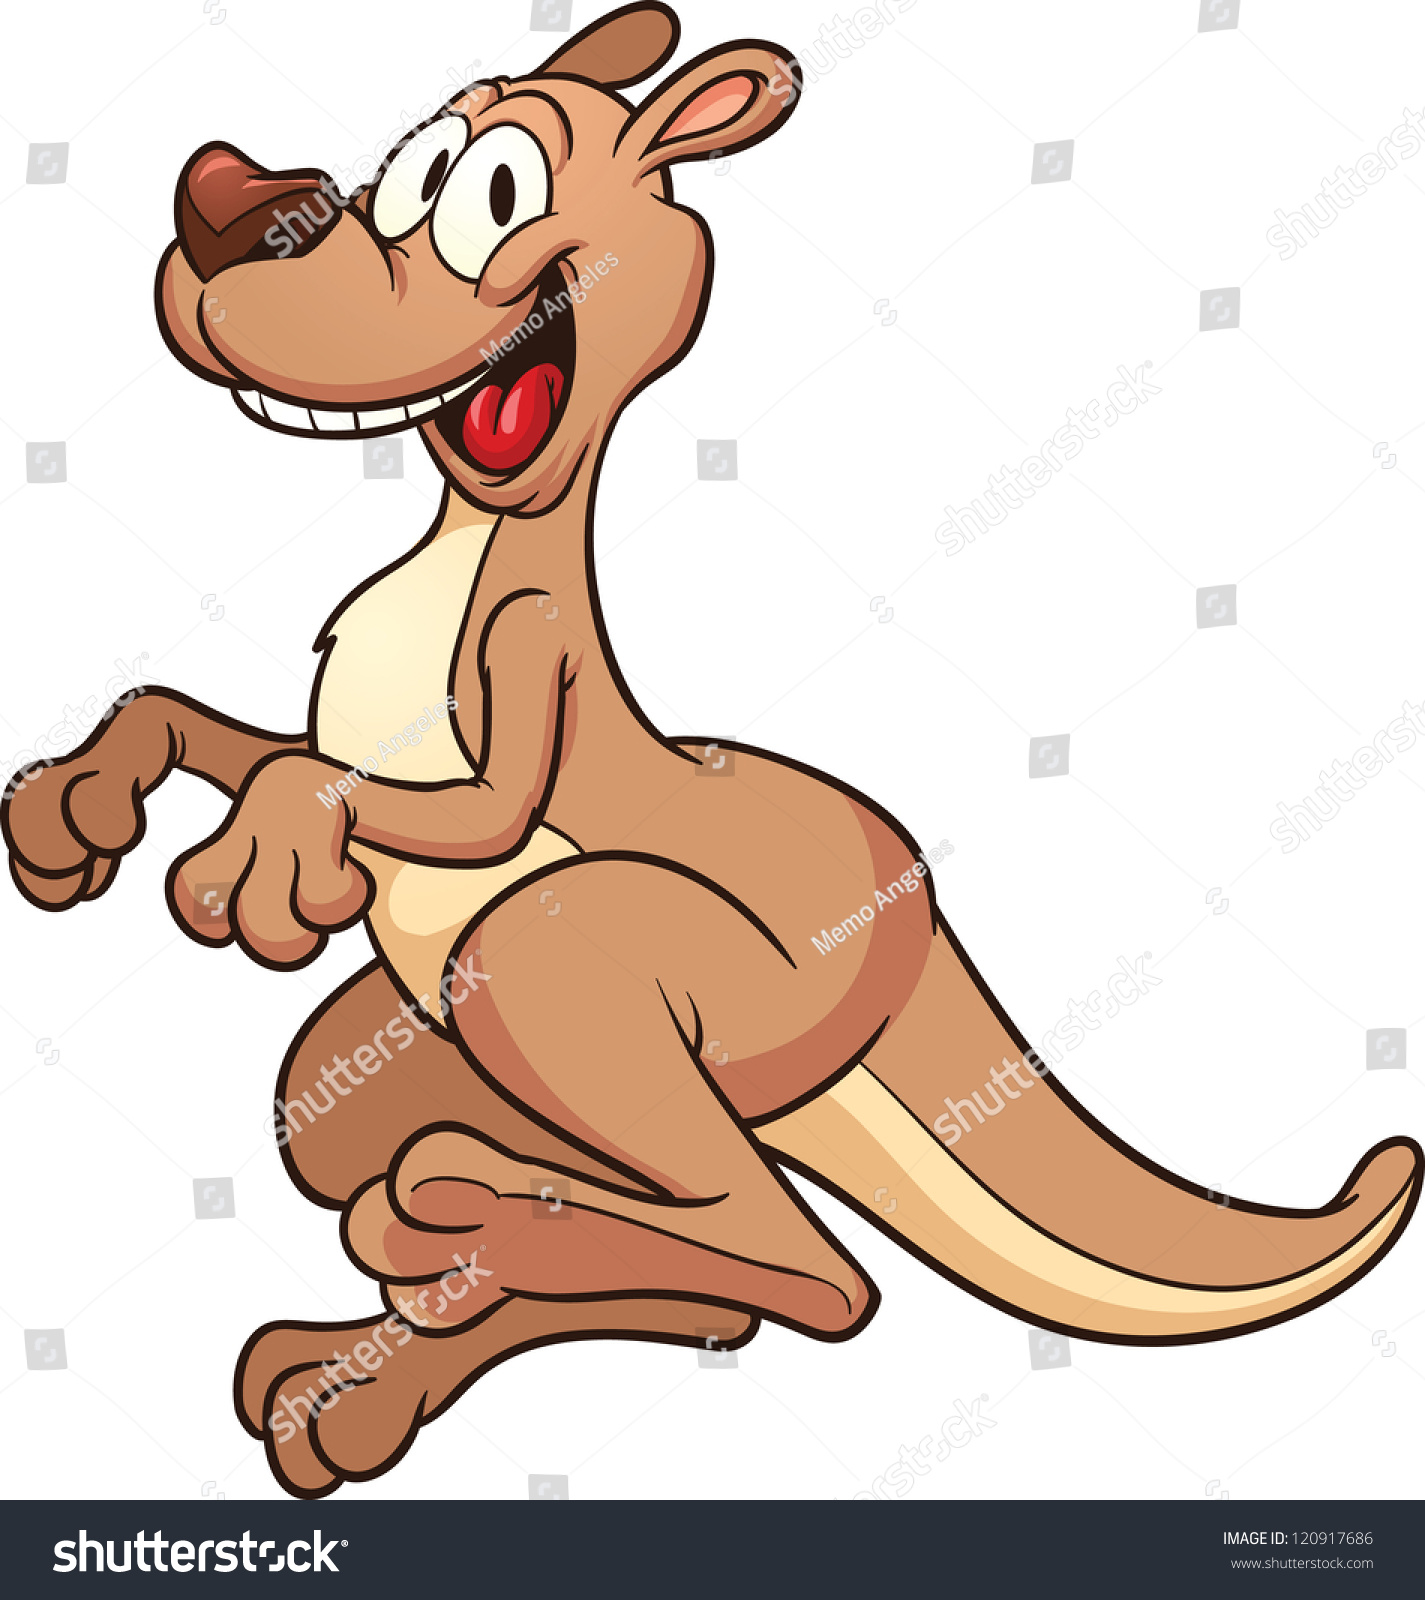 kangaroo vector clipart - photo #33